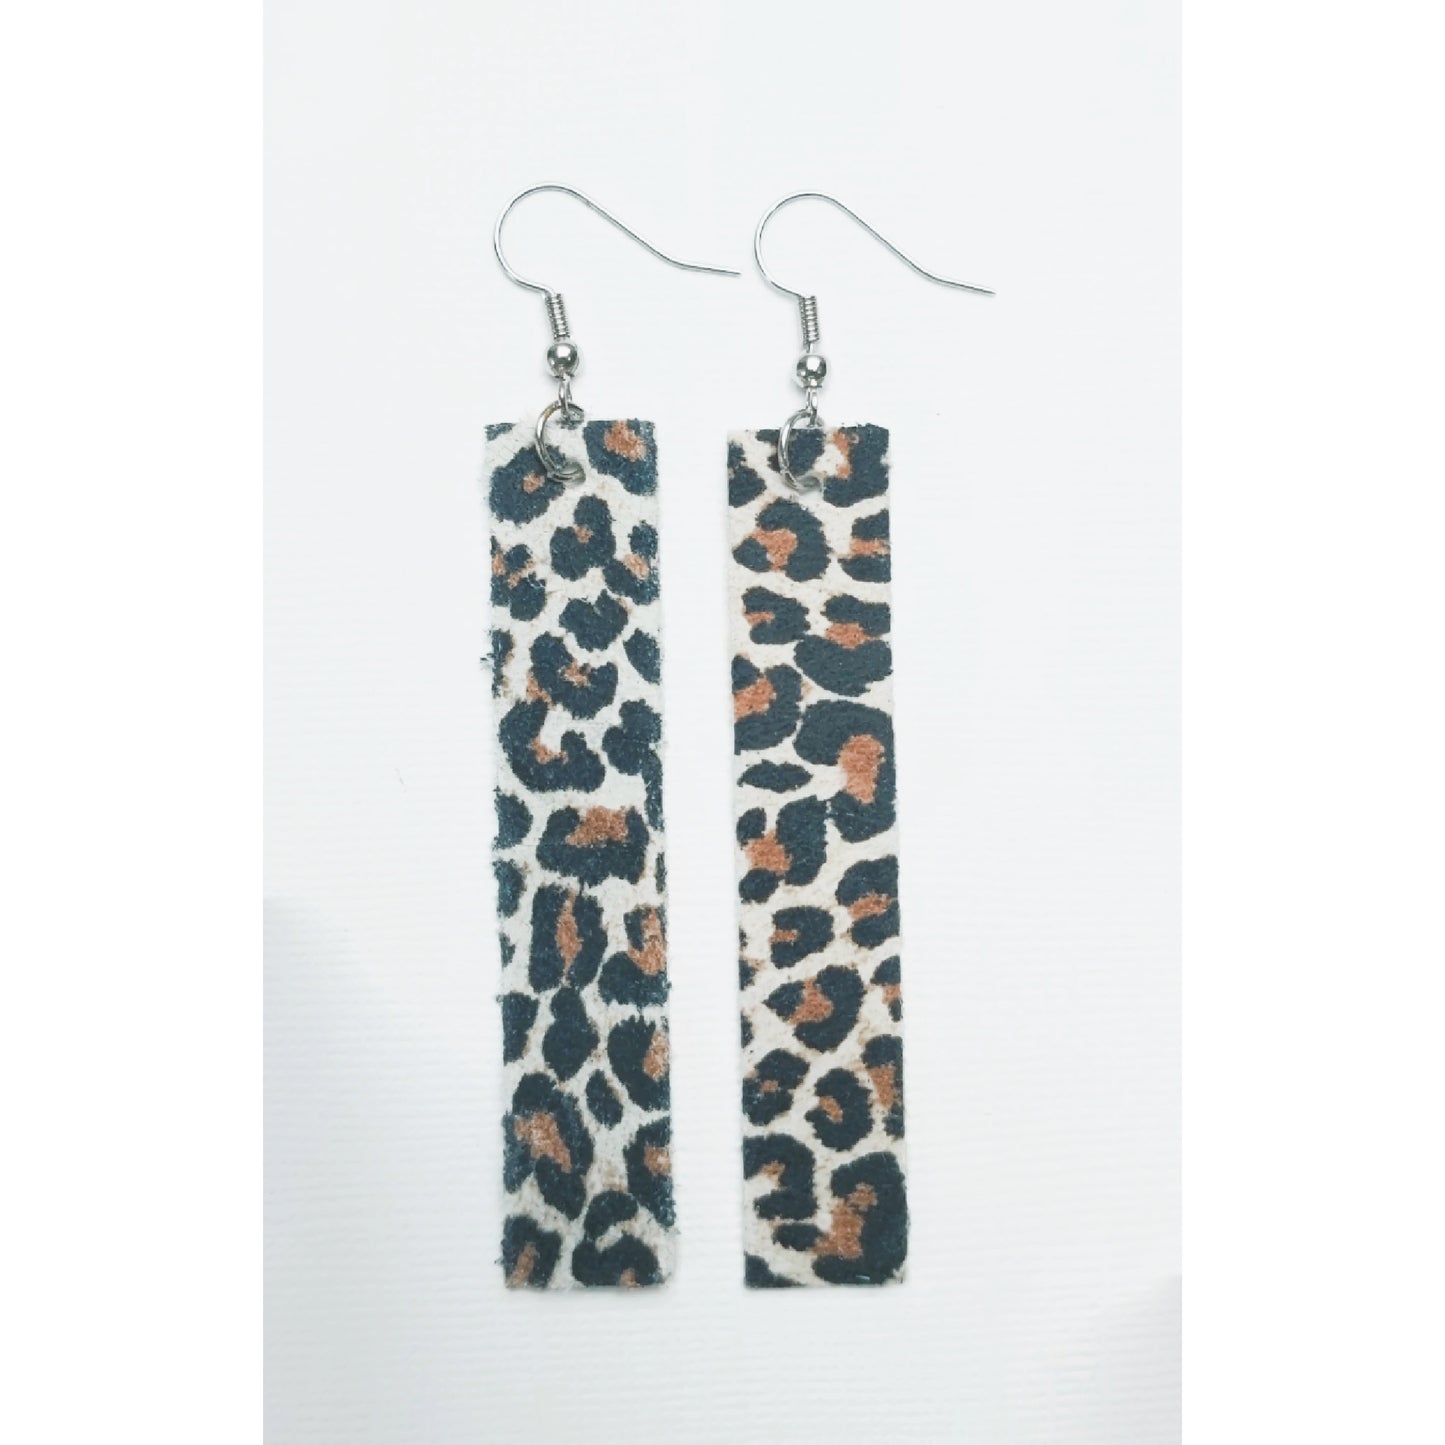 Genuine Leather Bar Earrings - Leopard Print